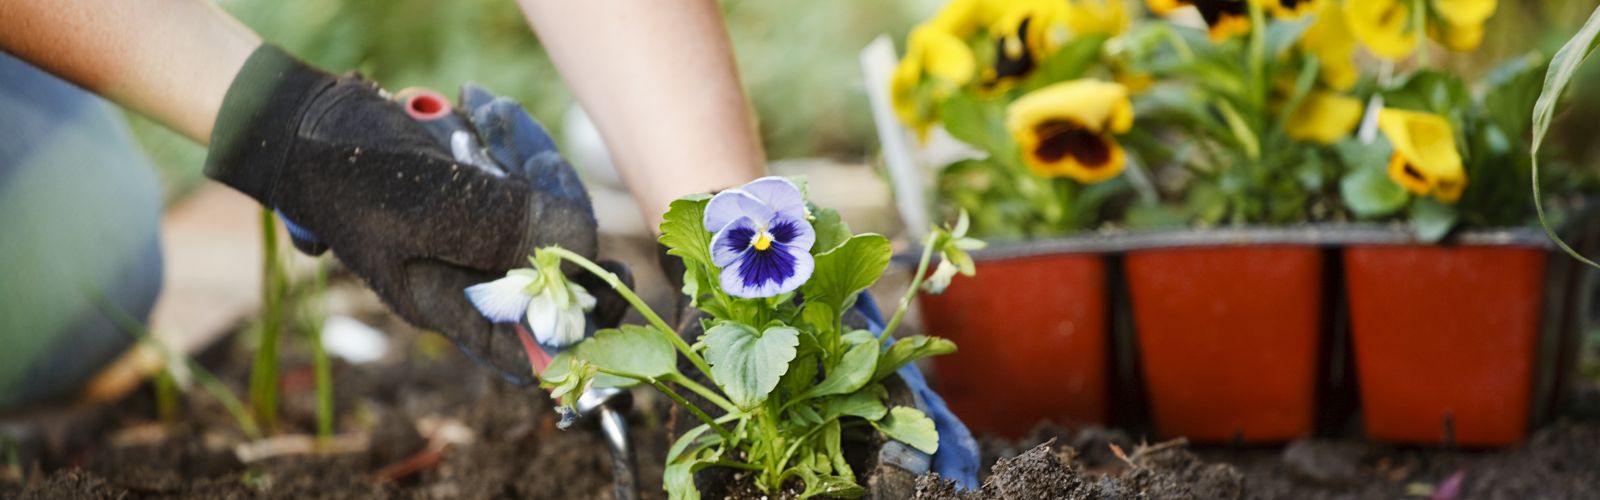 hands planting a viola flower in soil